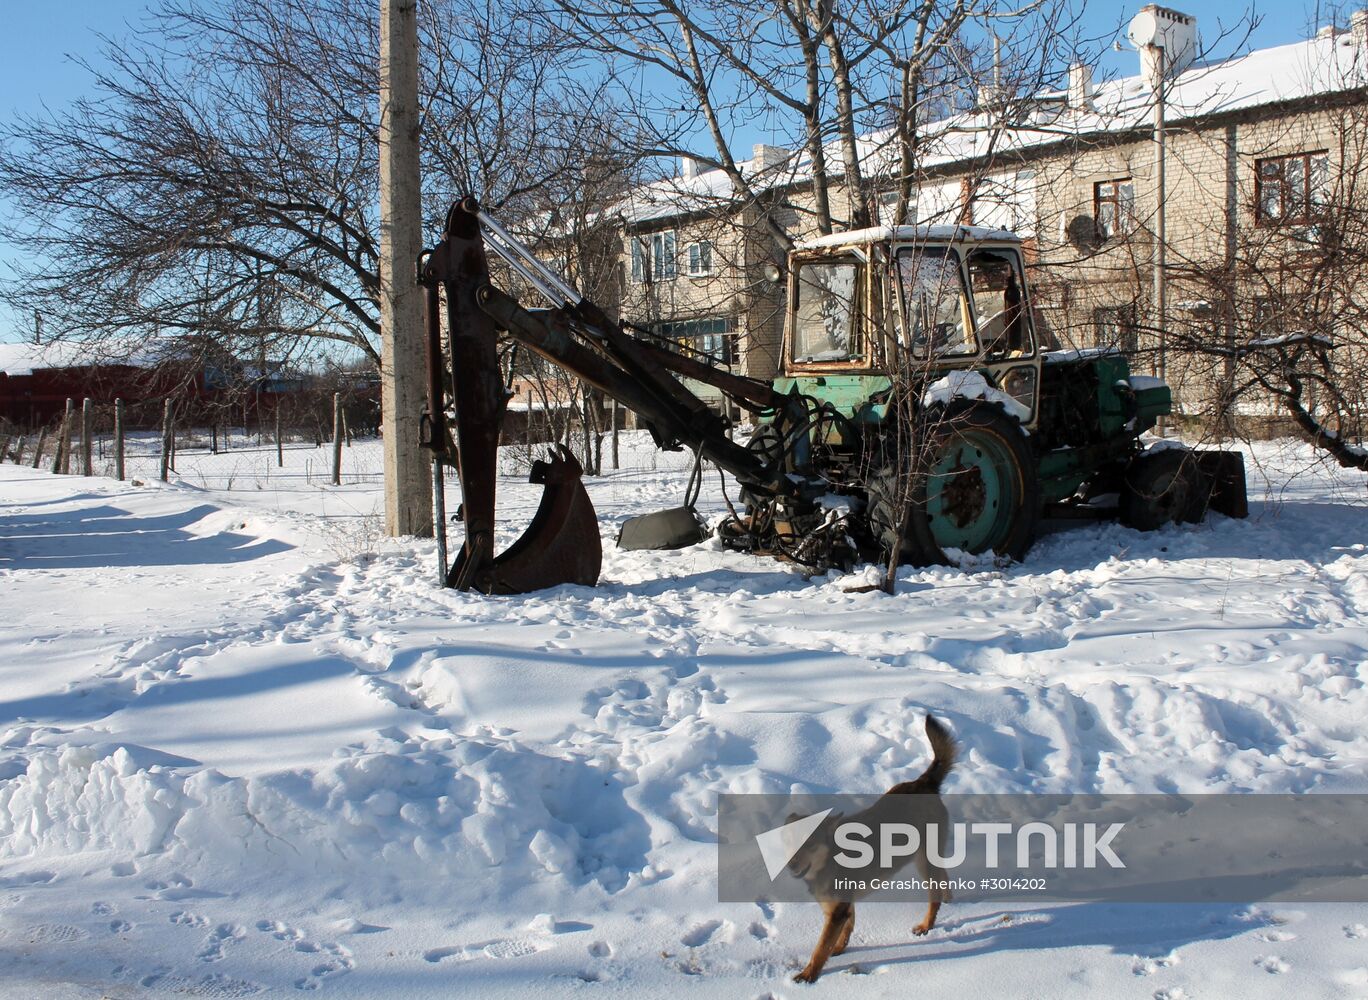 Village of Spartak, Donetsk region